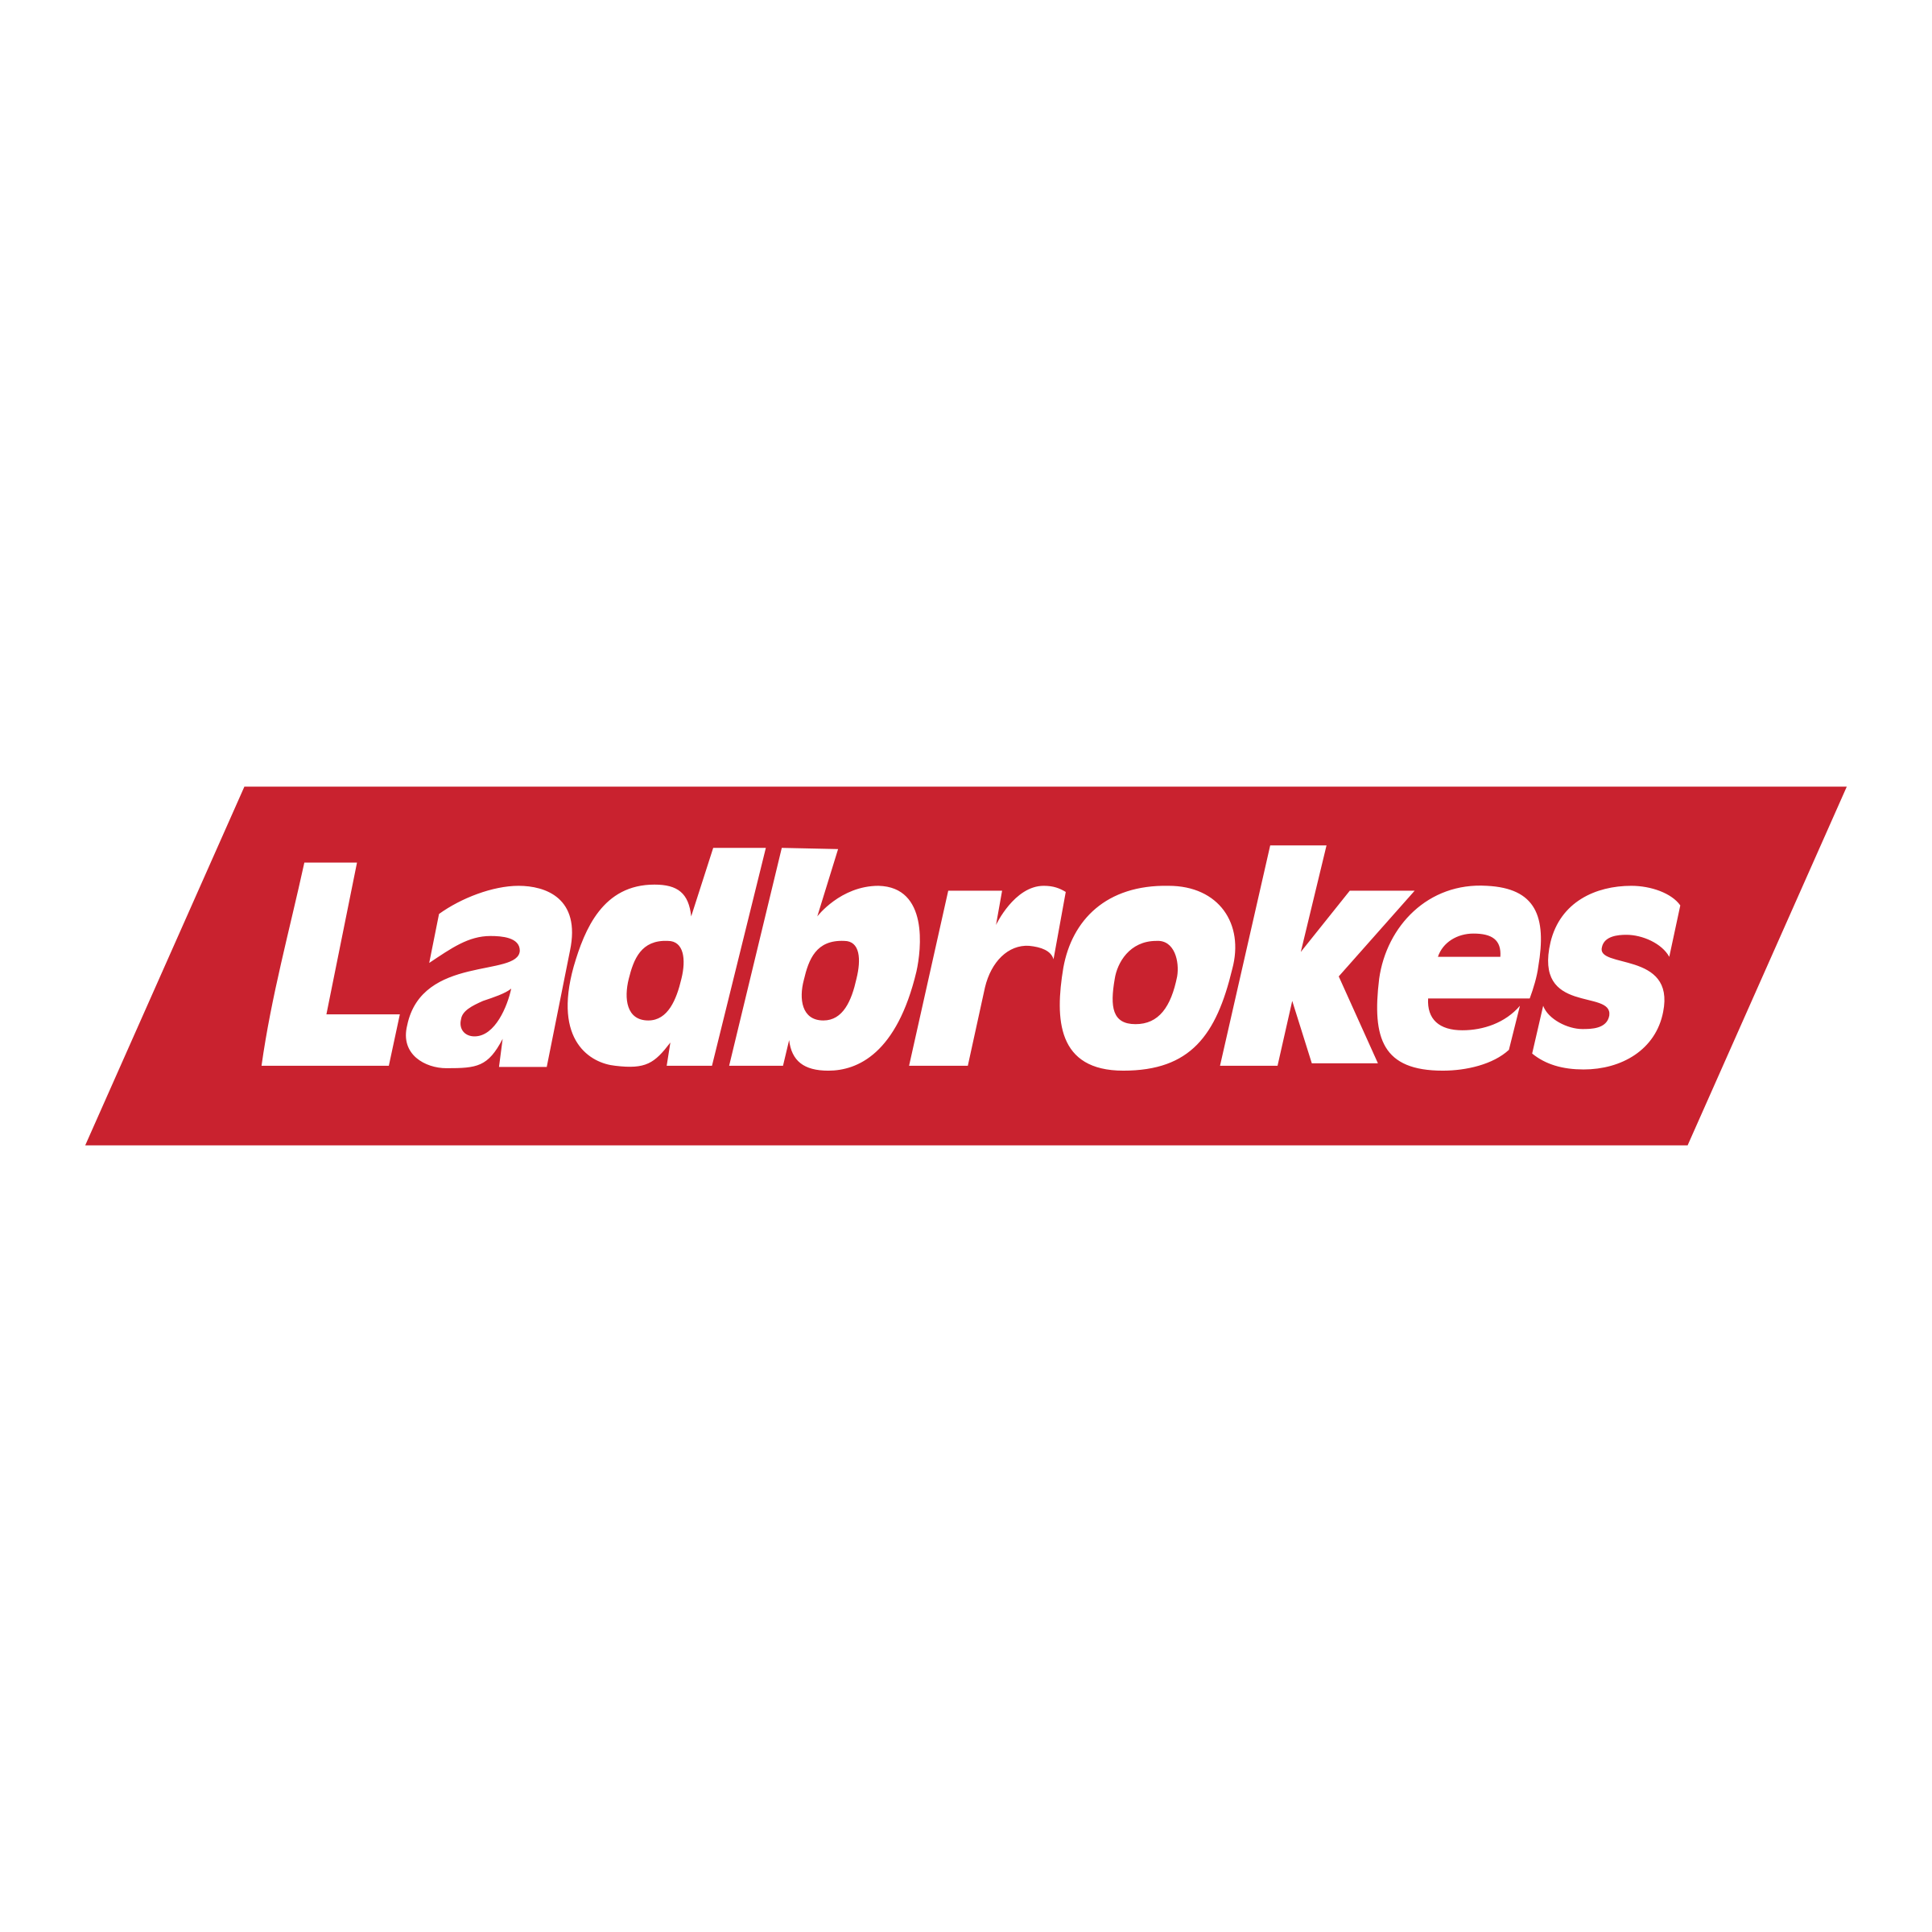 Ladbrokes Logo PNG Transparent & SVG Vector.